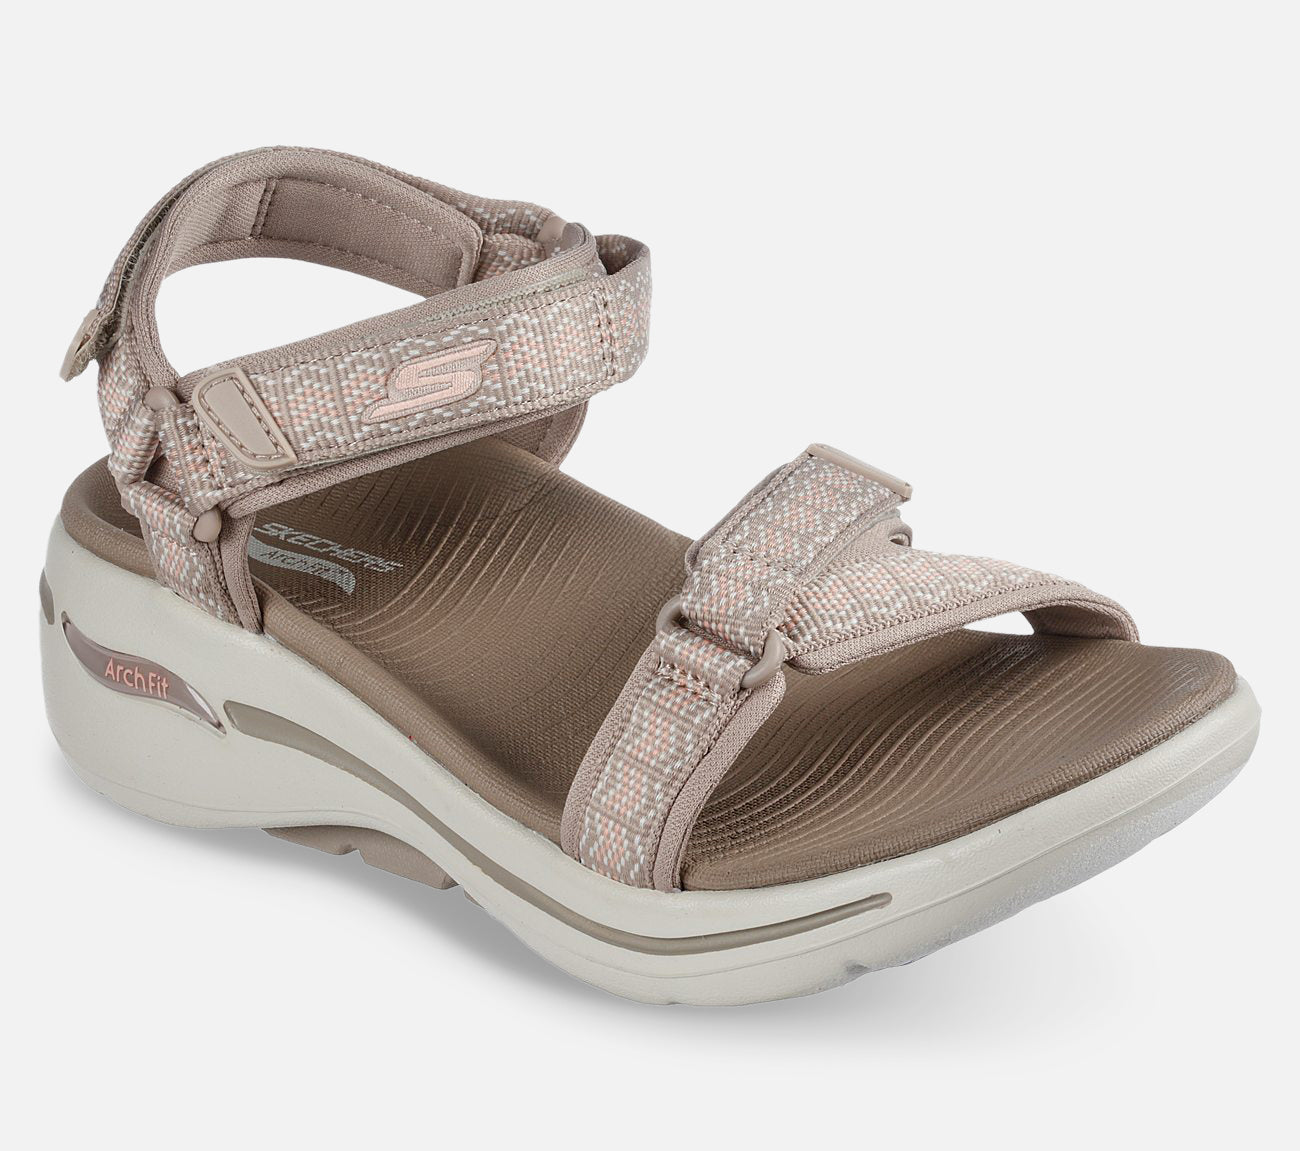 GO WALK Arch Fit - Affinity Sandal Skechers